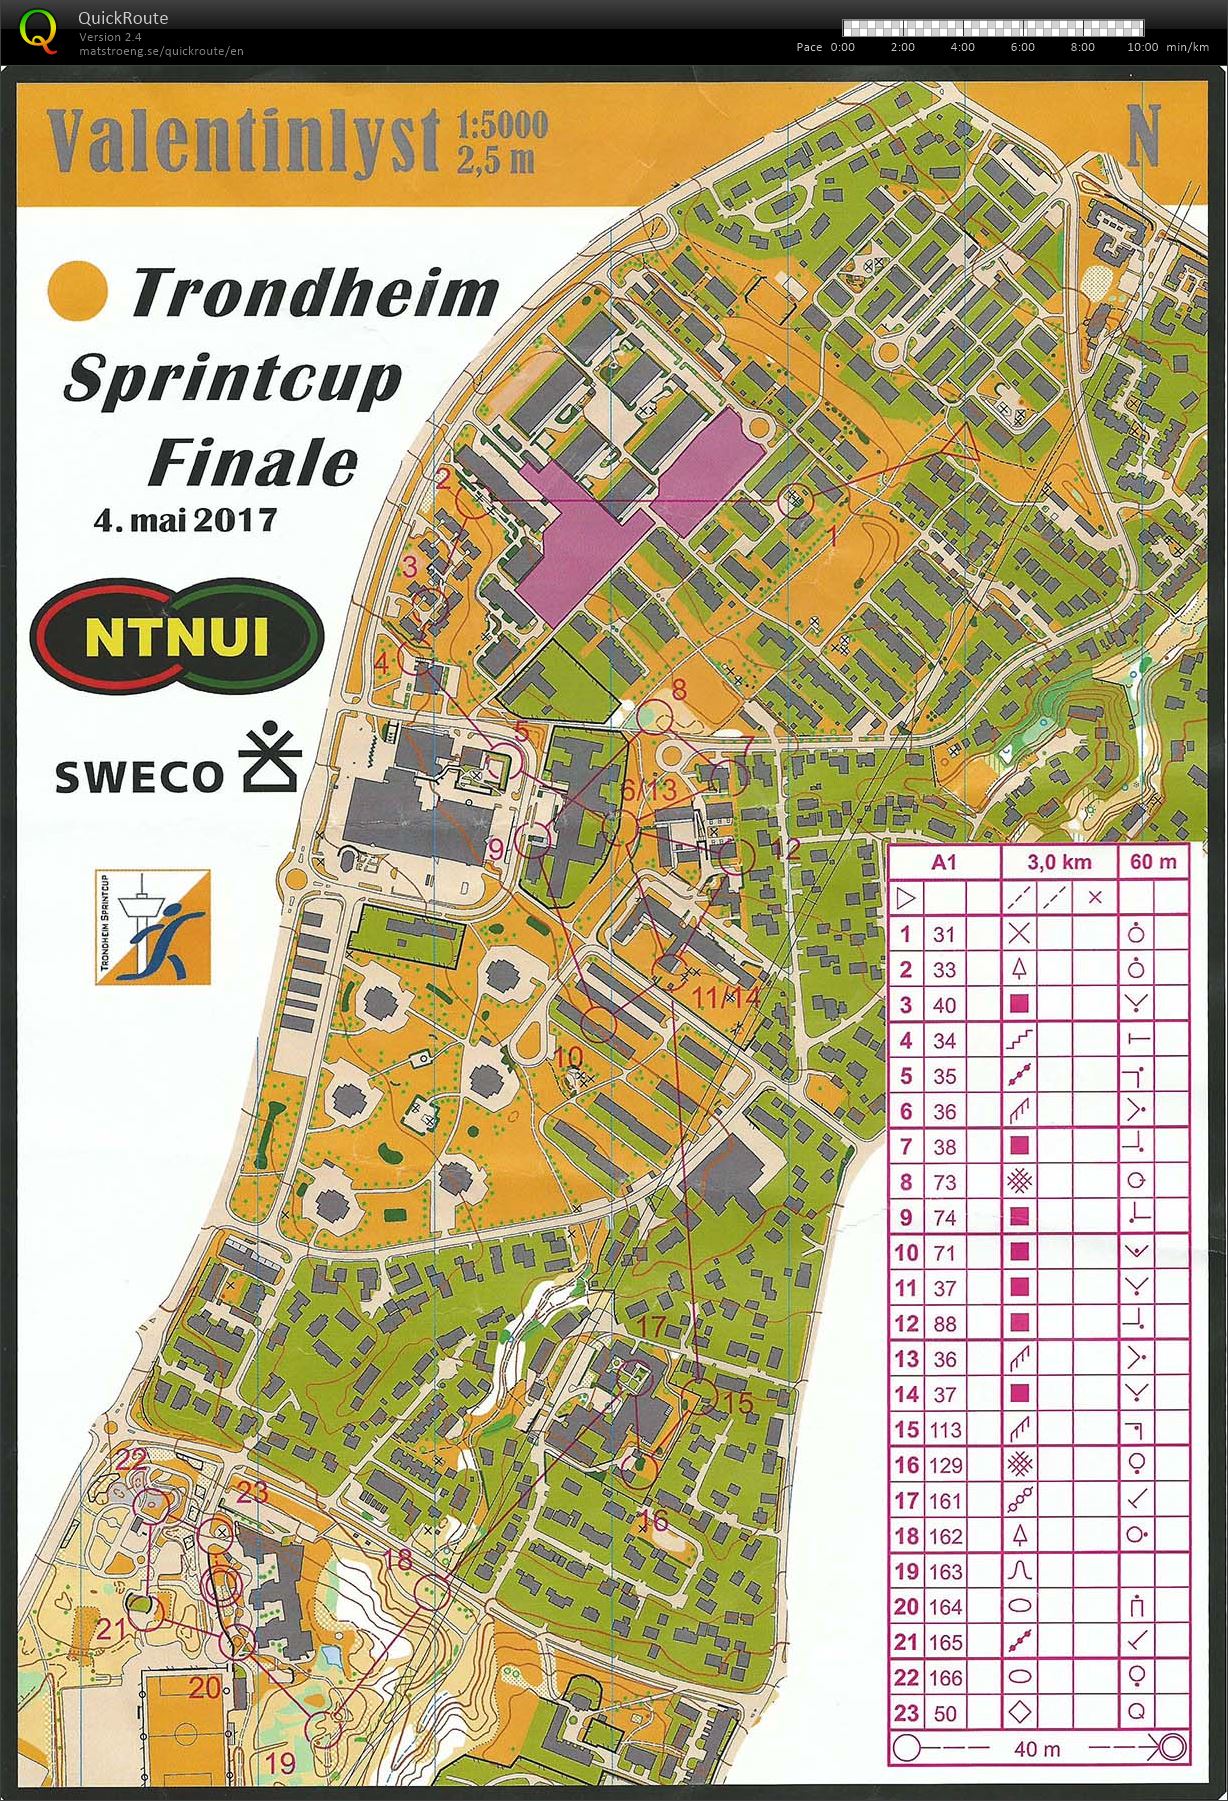 Trondheim Sprintcup finale (04.05.2017)